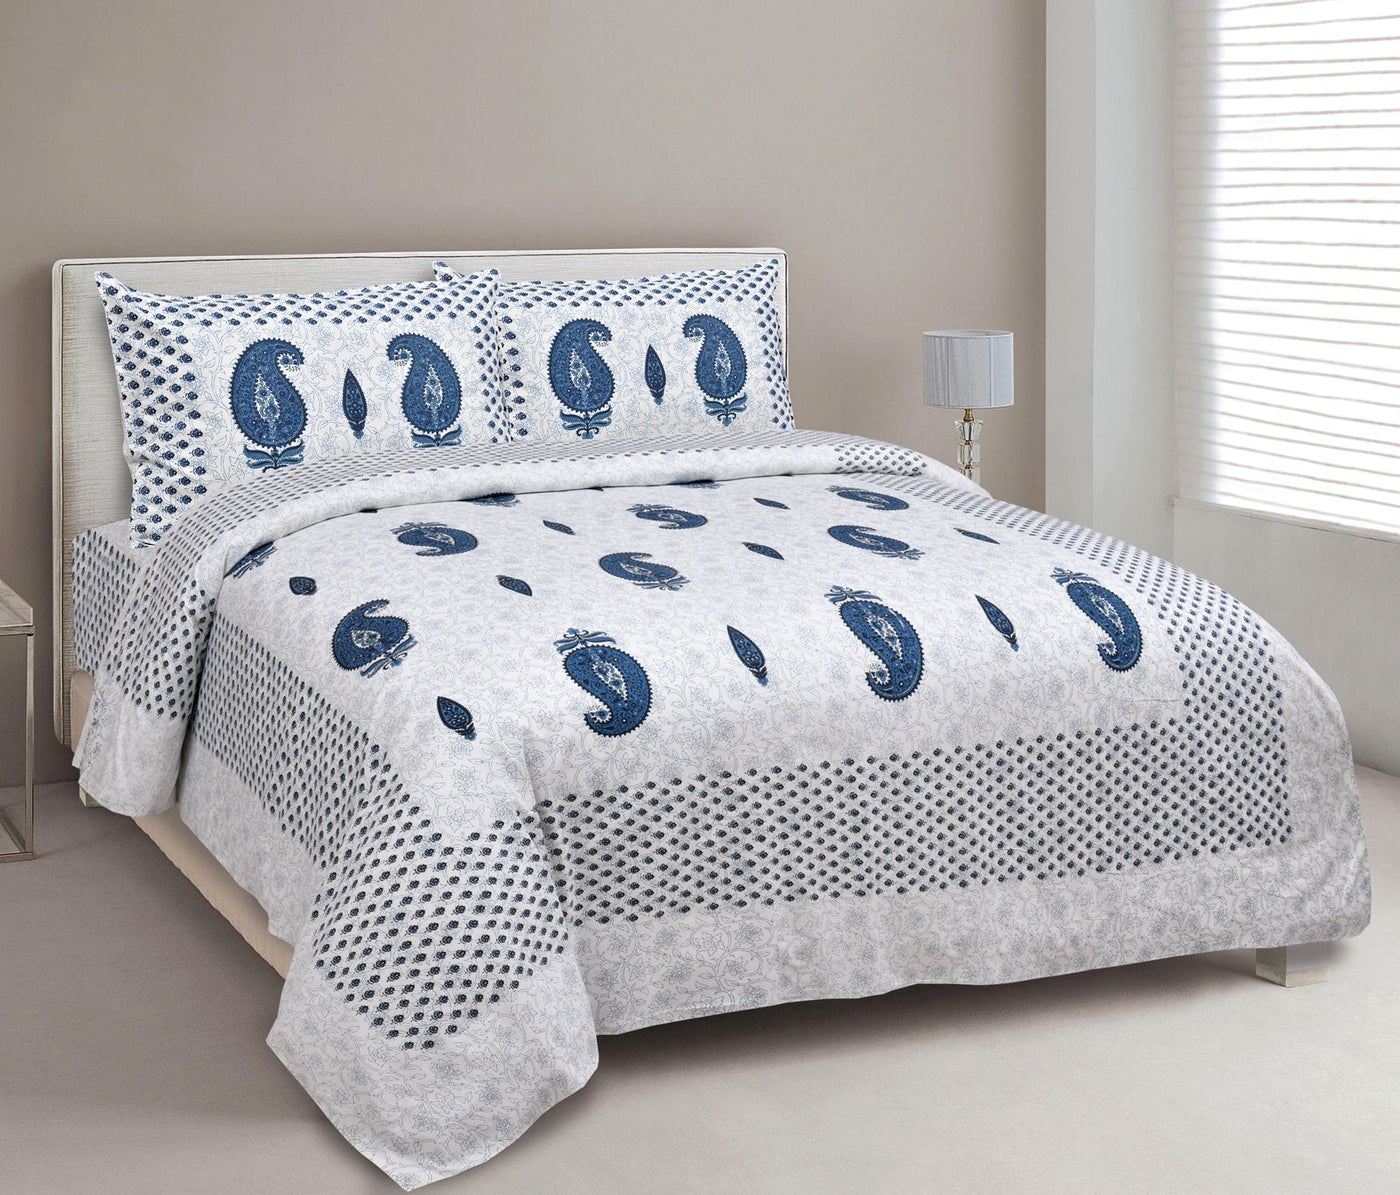 Very Beautiful White Base Blue Boota Print 100% Purer Cotton Bed Sheet